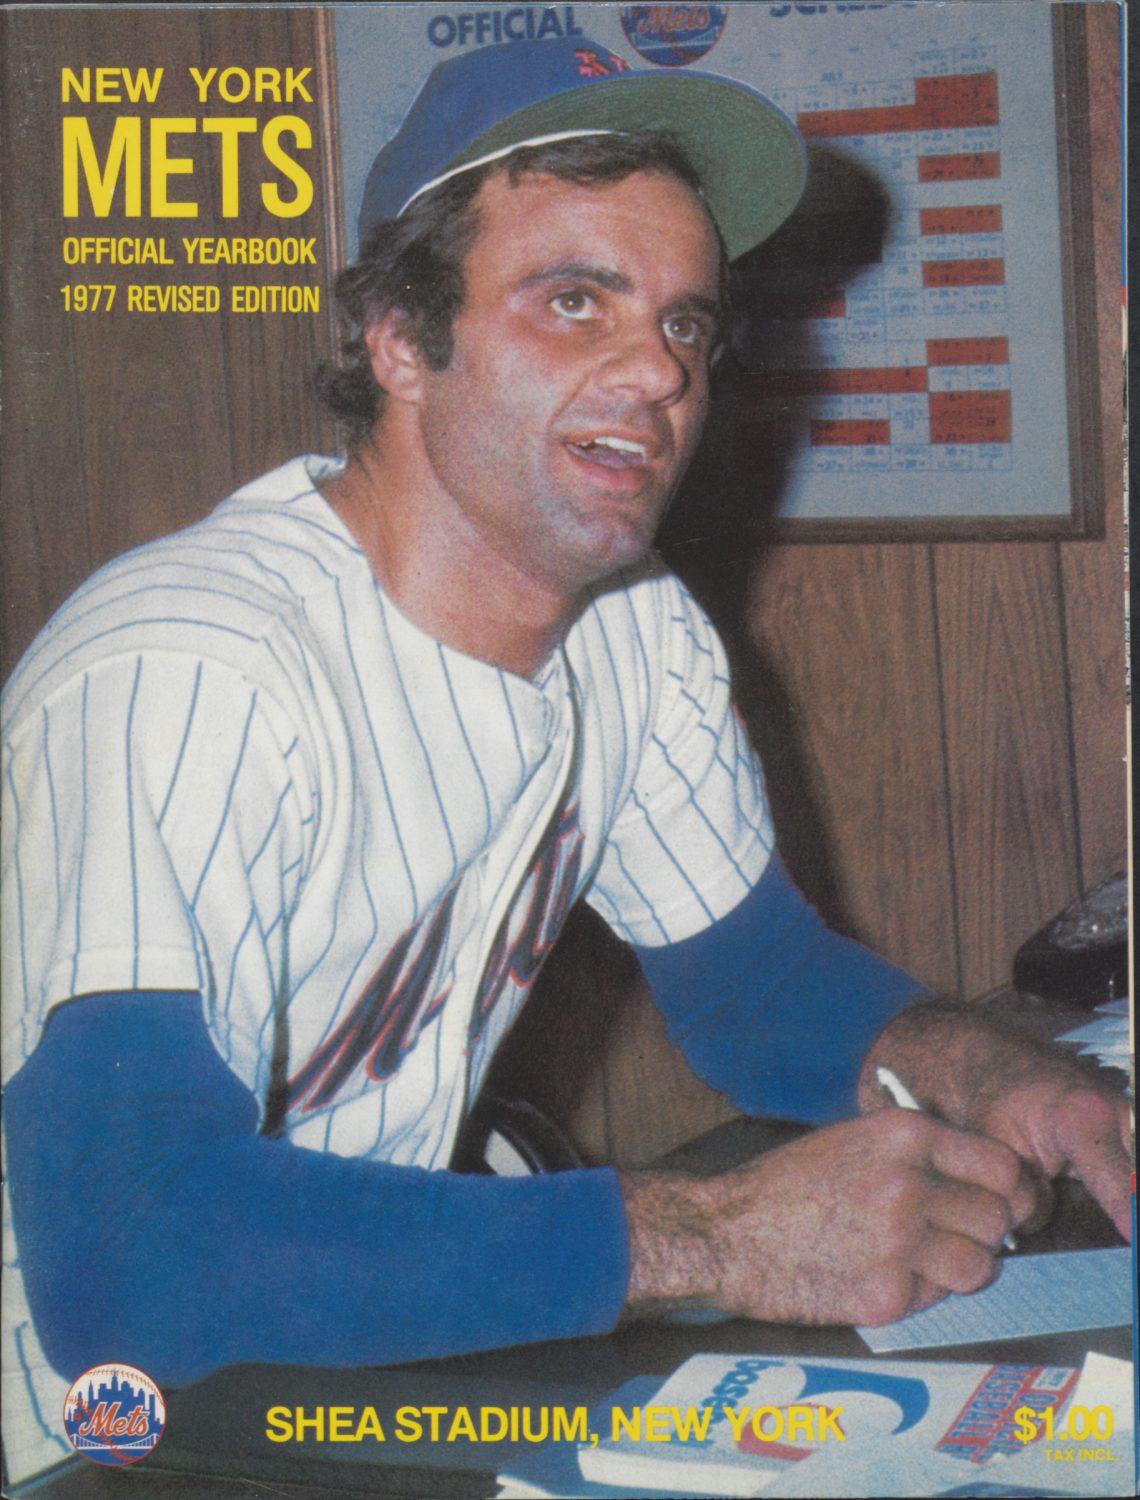 1977 New York Mets Official Yearbook with Joe Torre